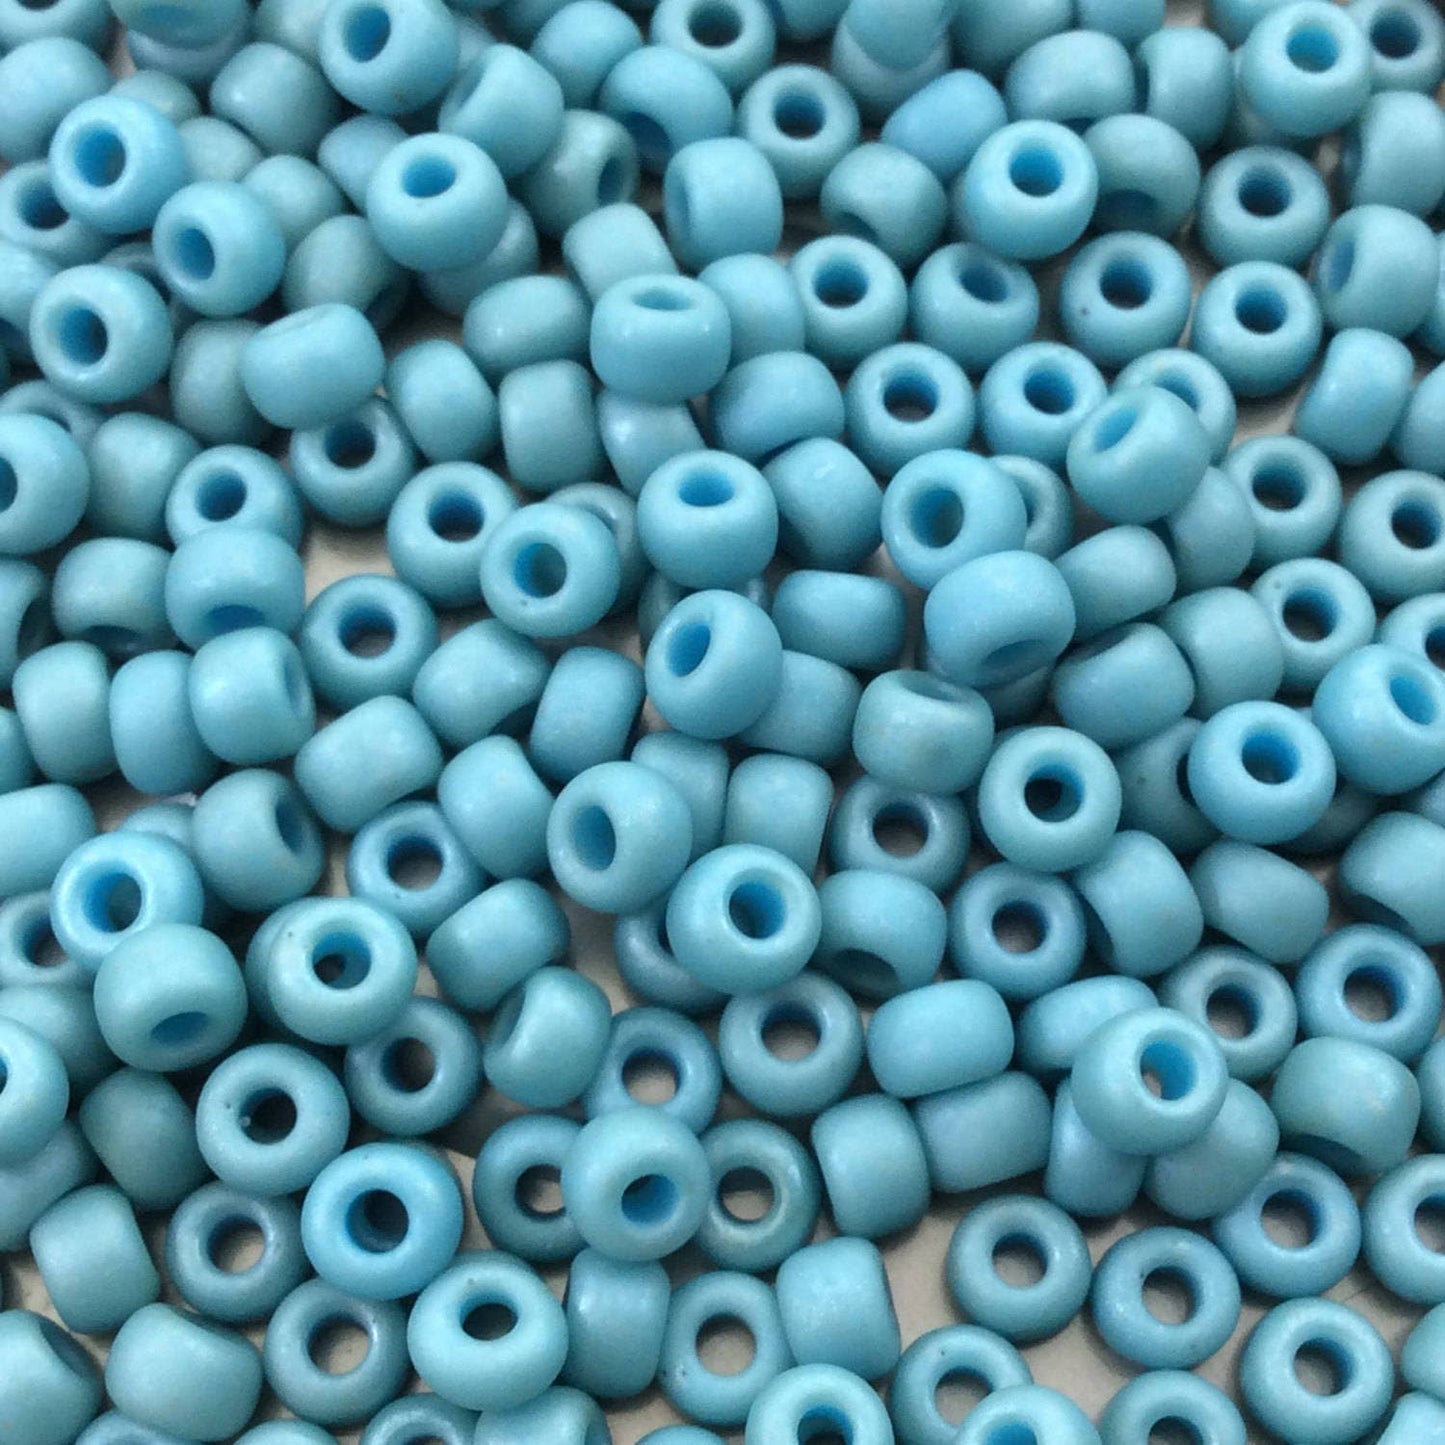 Size 6/0 Matte Finish Metallic Turquoise Genuine Miyuki Glass Seed Beads - Sold by 20 Gram Tubes (Approx. 200 Beads per Tube) - (6-91251)